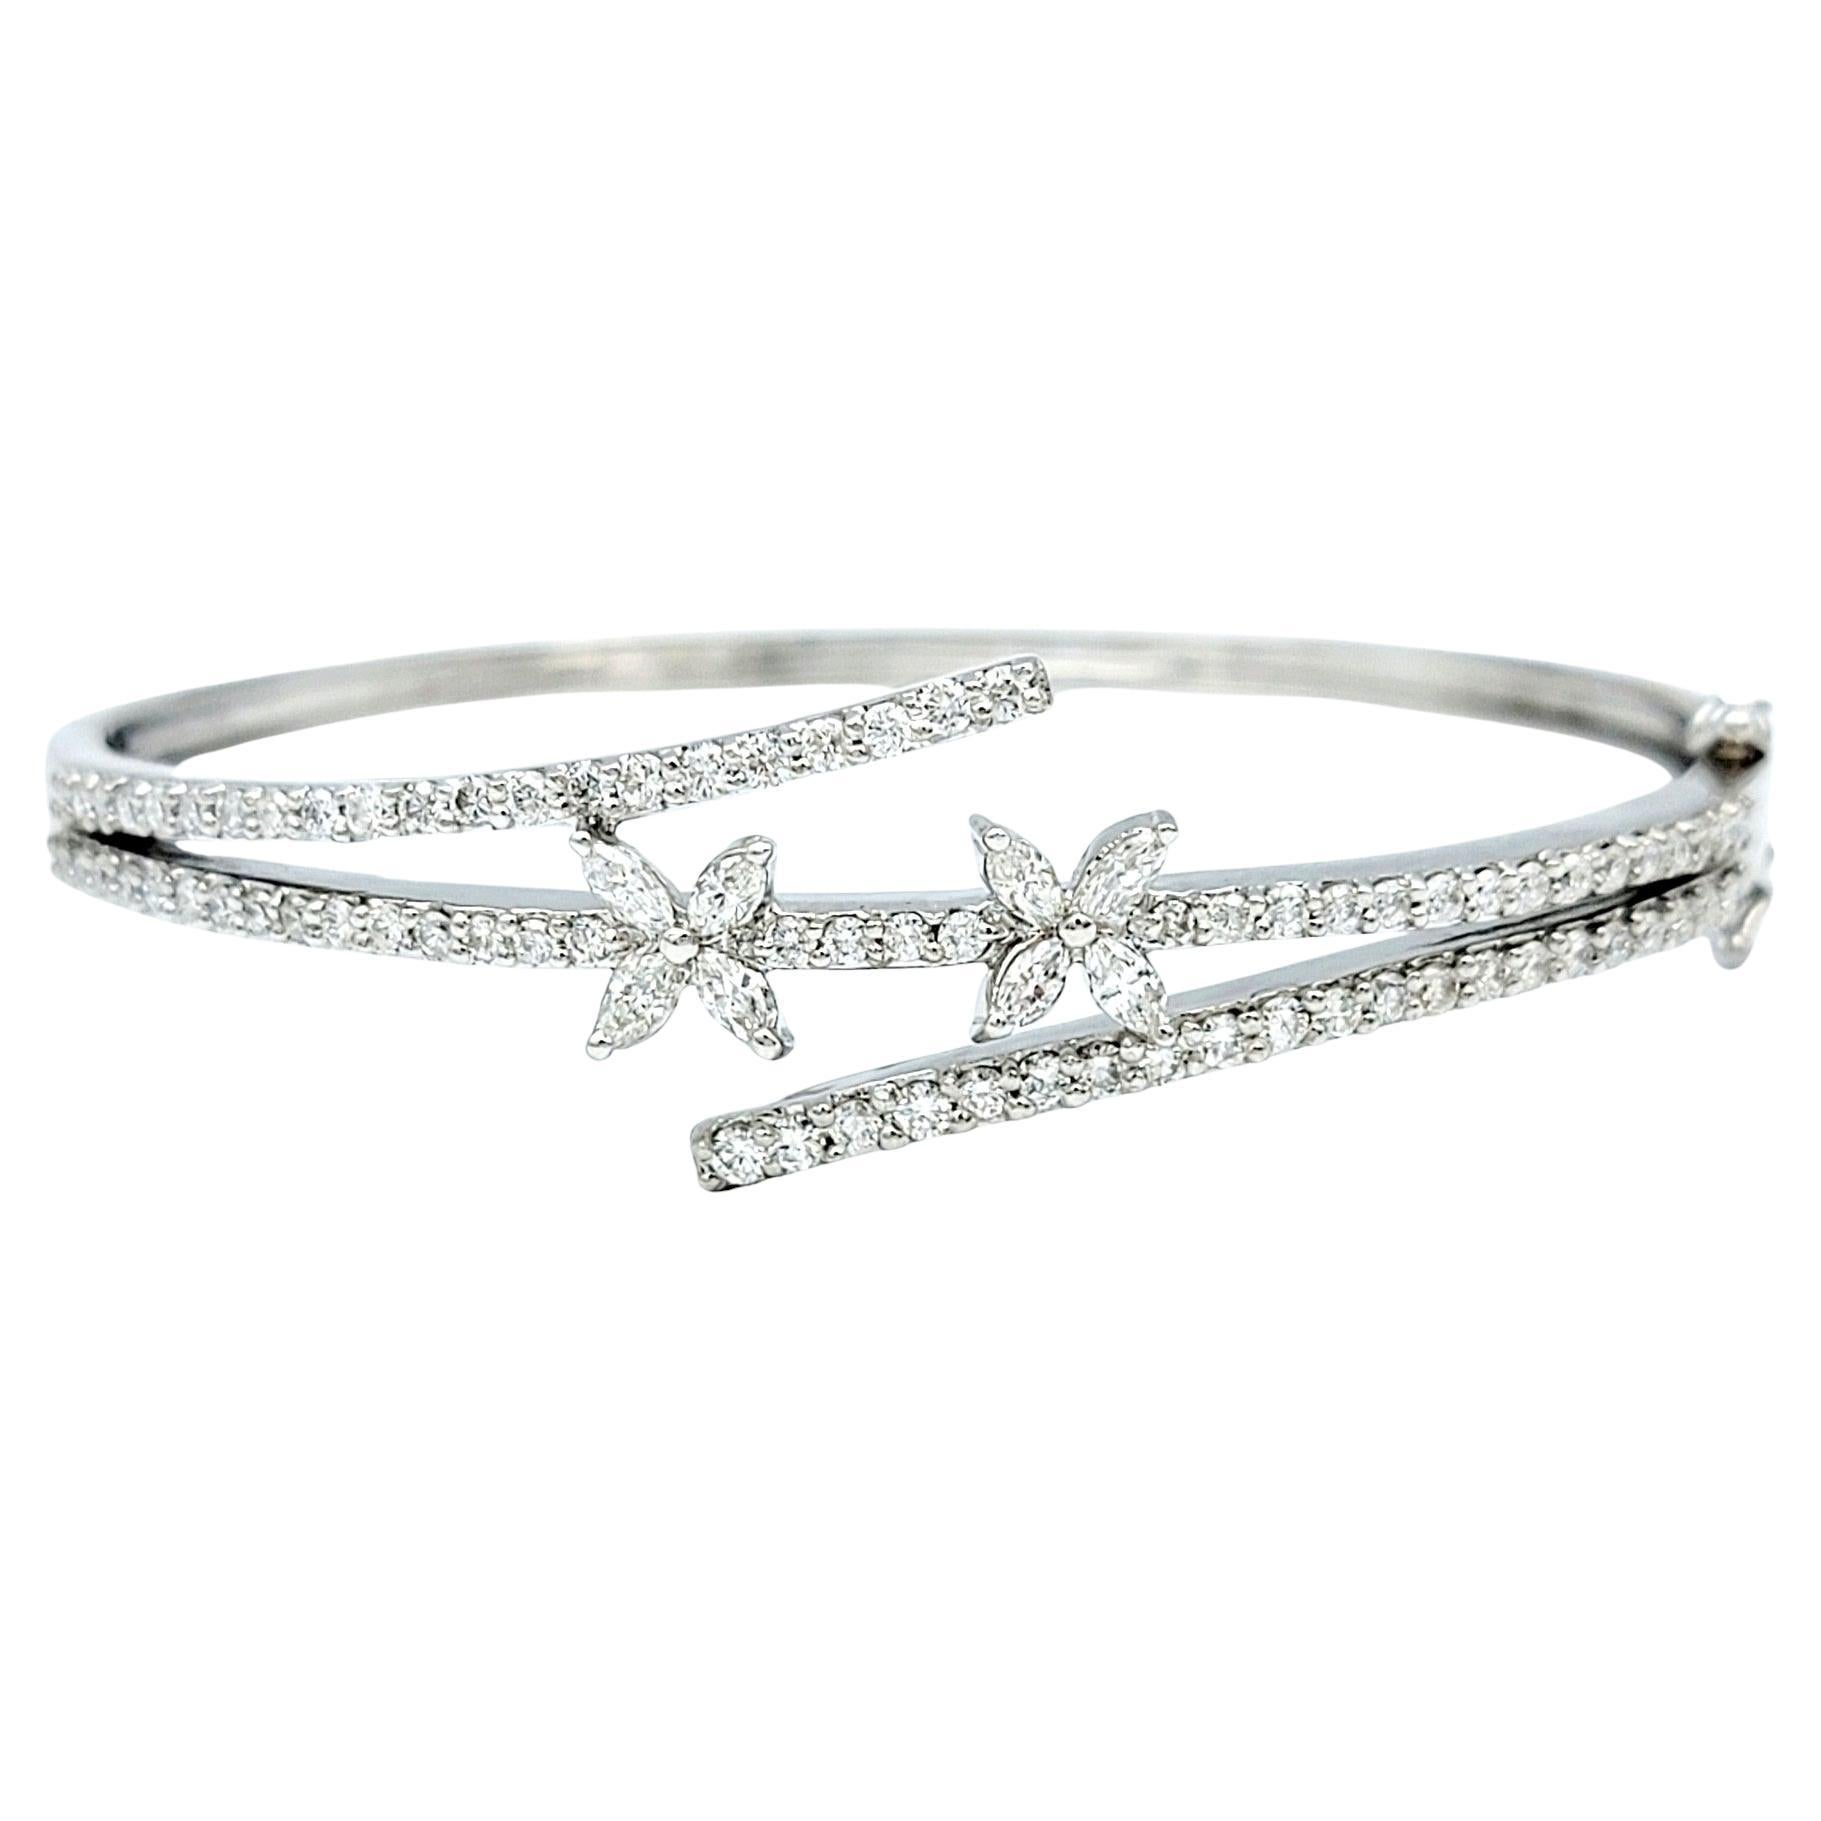 Round Diamond Floral Bypass Style Bangle Bracelet Set in 18 Karat White Gold